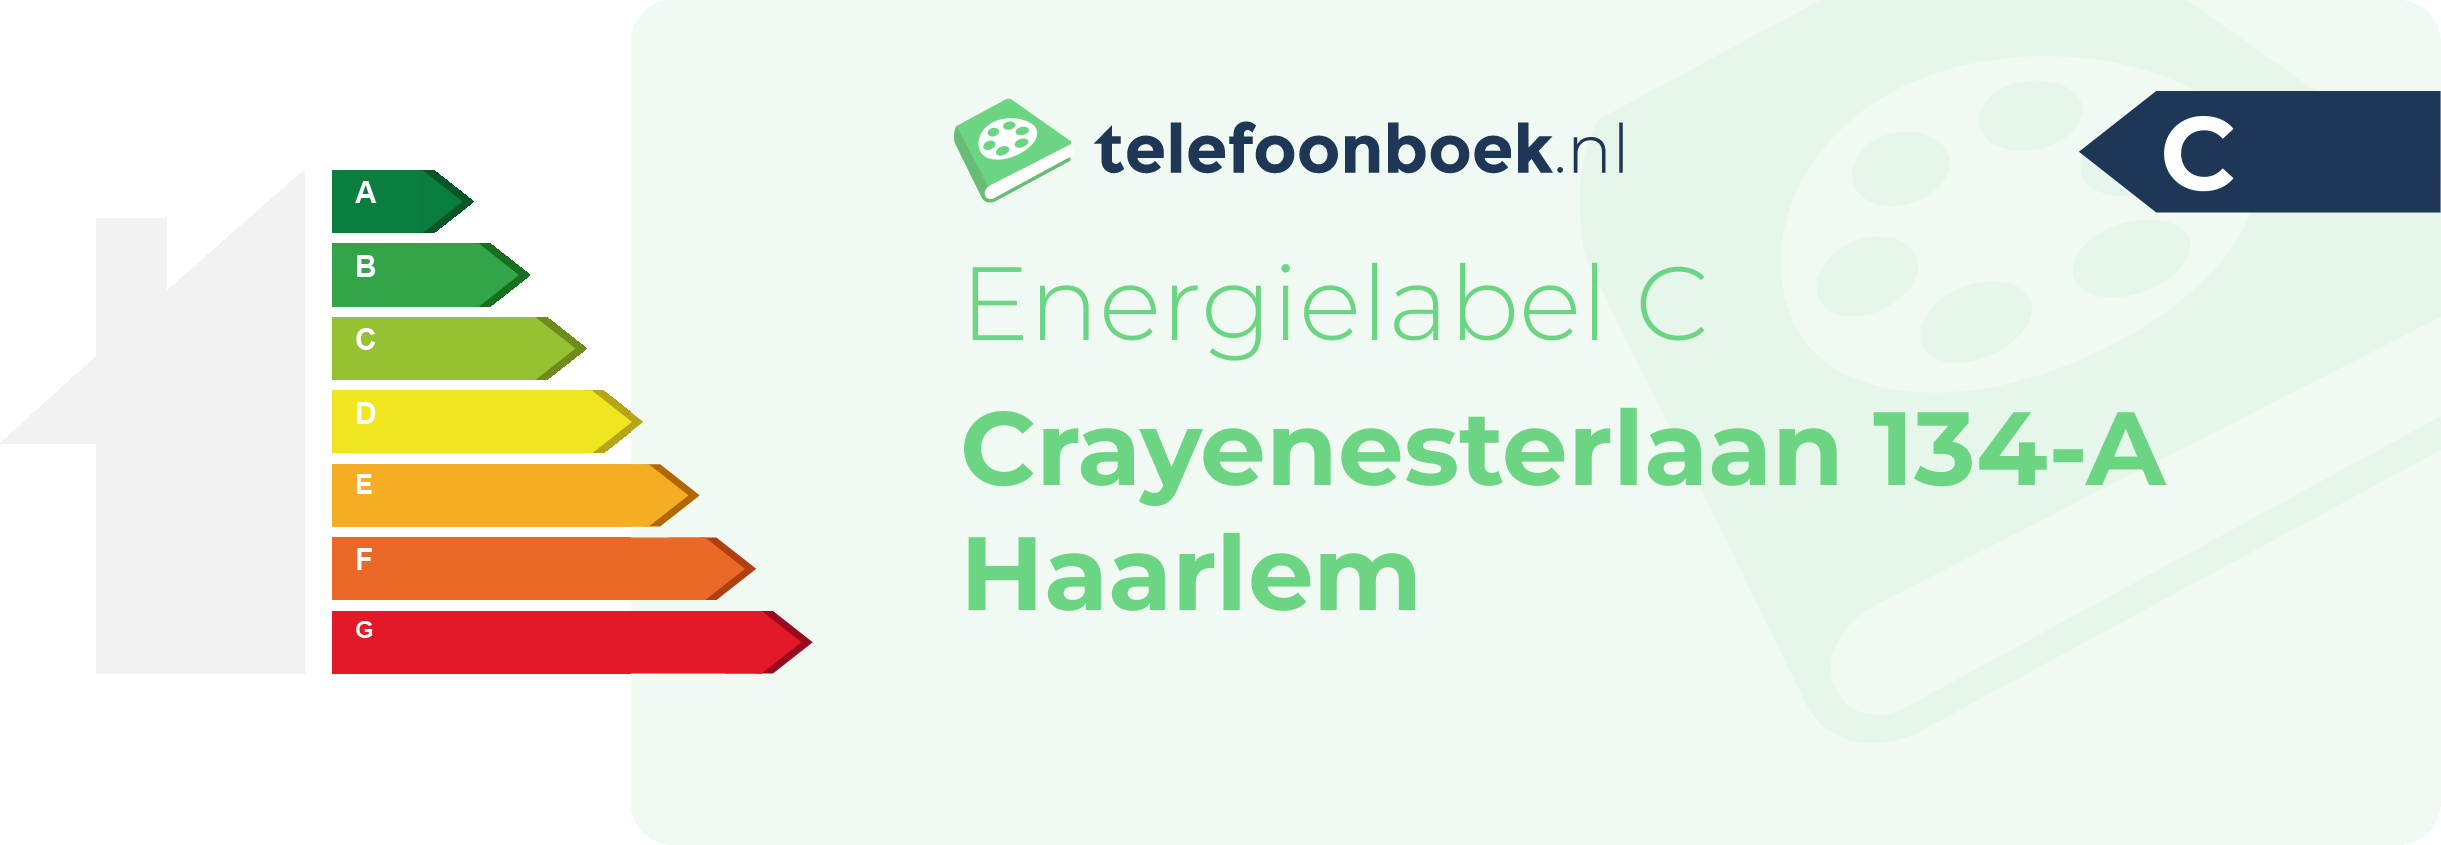 Energielabel Crayenesterlaan 134-A Haarlem